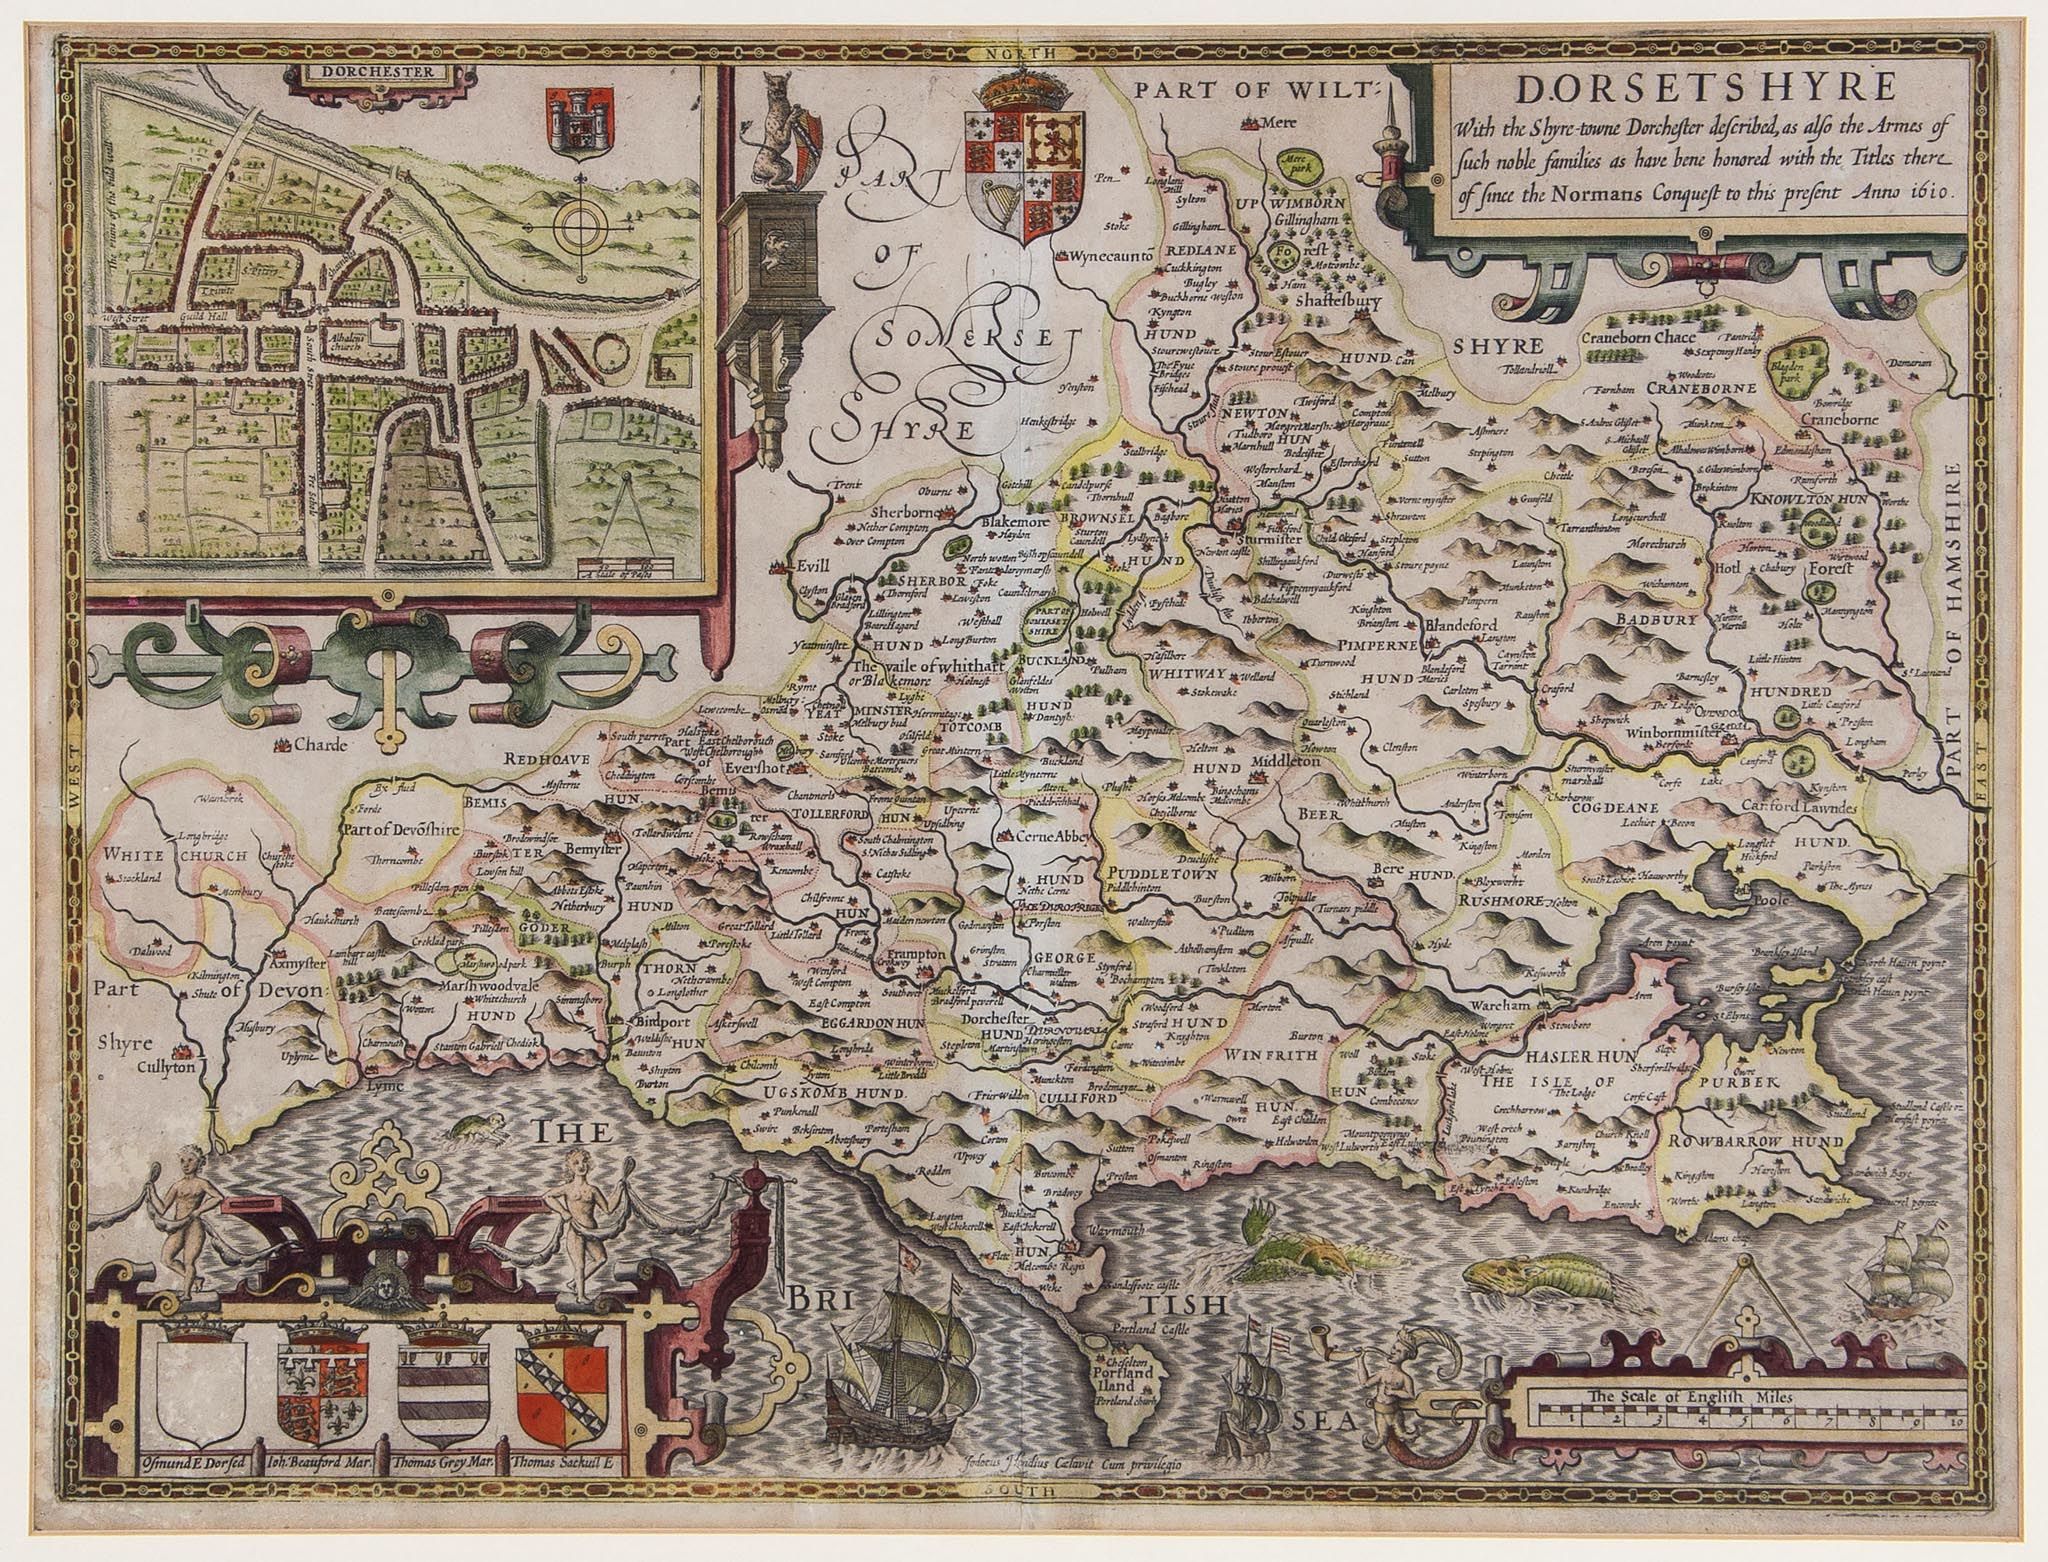 Dorsetshire.- Speed (John) - Dorsetshyre, inset plan of Dorchester, upper left, strapwork title